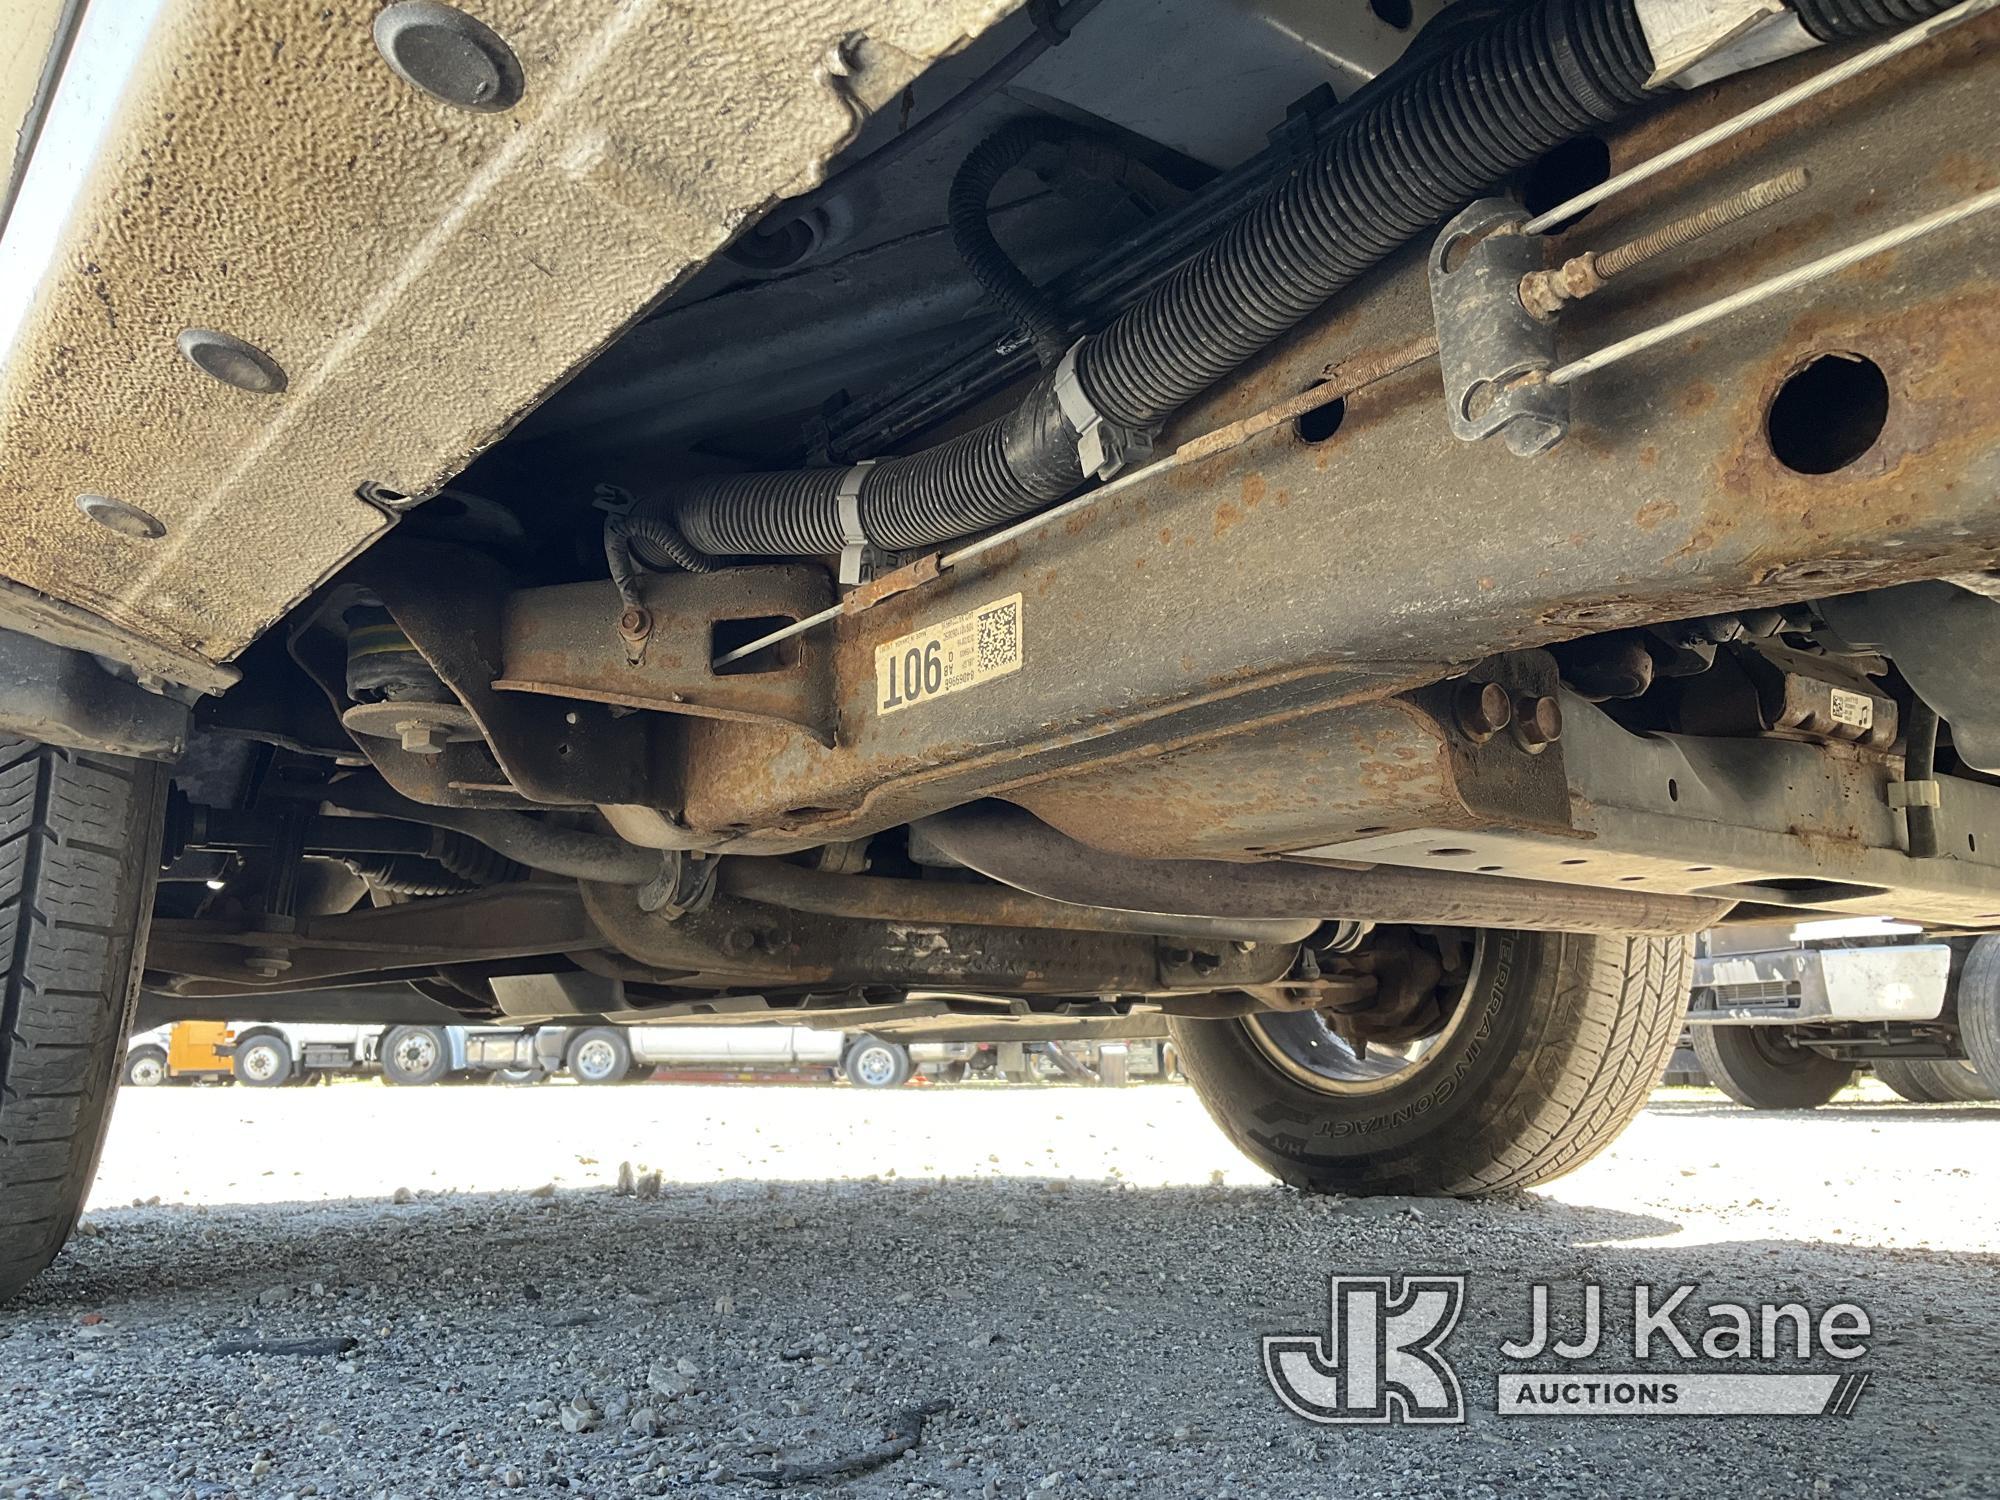 (Plymouth Meeting, PA) 2016 GMC Sierra 1500 4x4 Pickup Truck Runs & Moves, Body & Rust Damage